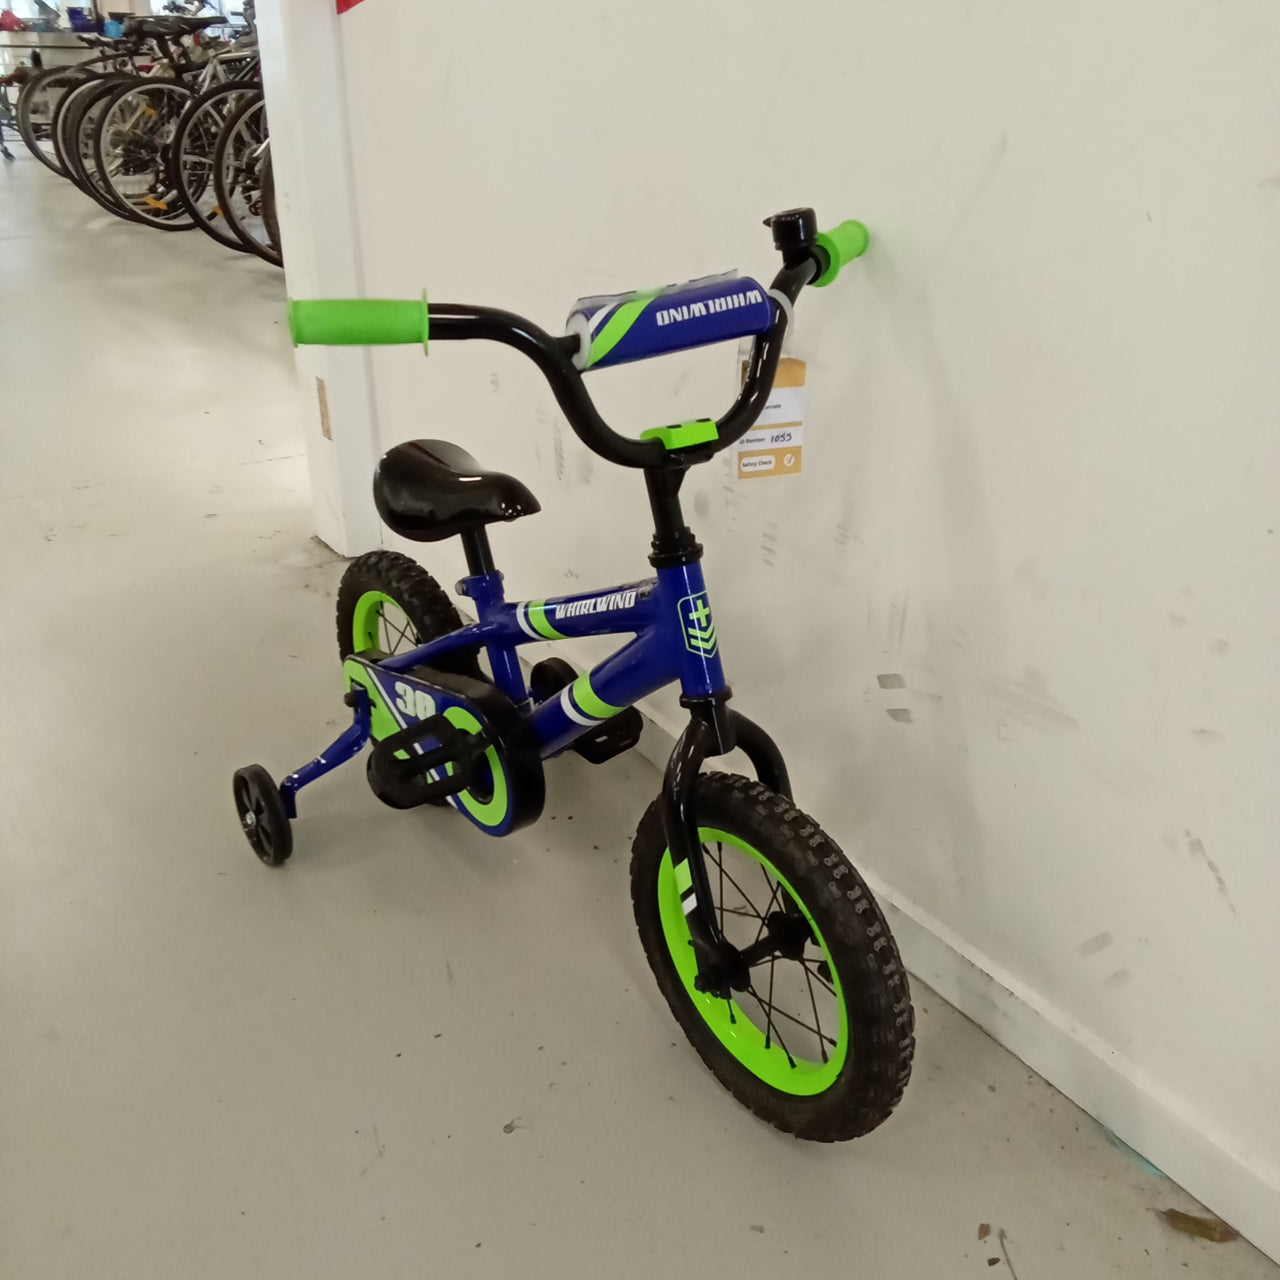 1055 - 12" Blue,
Green, Kids, Bike